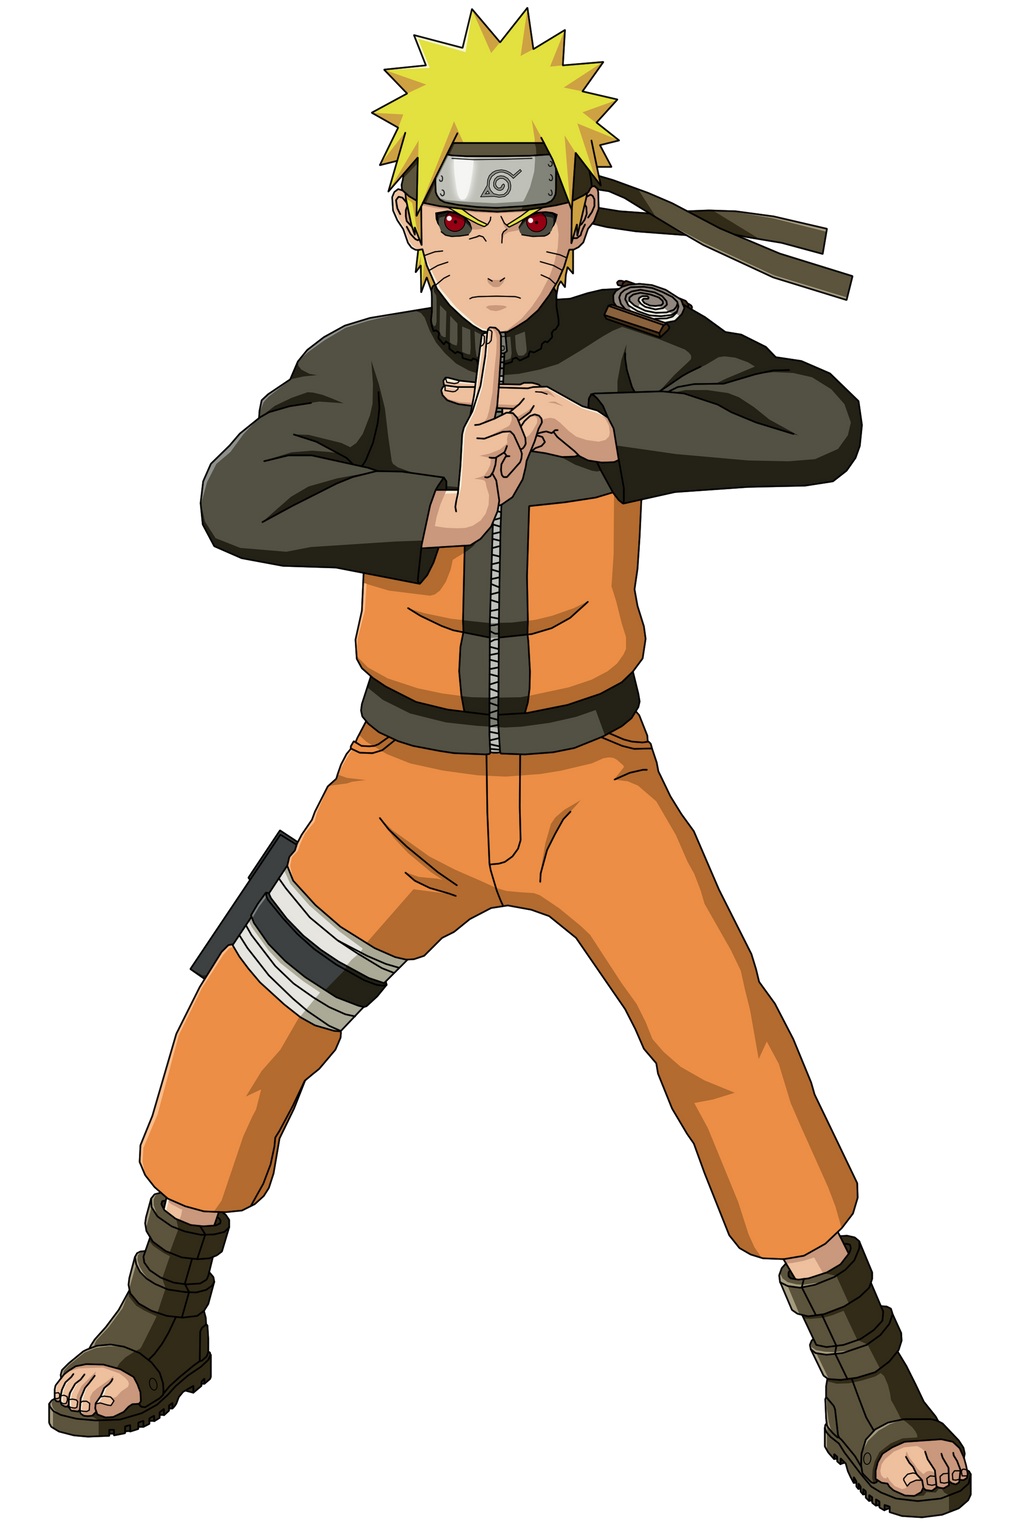 Naruto Alternative III - Heróis de Shippuden - Thiga_DarkNight